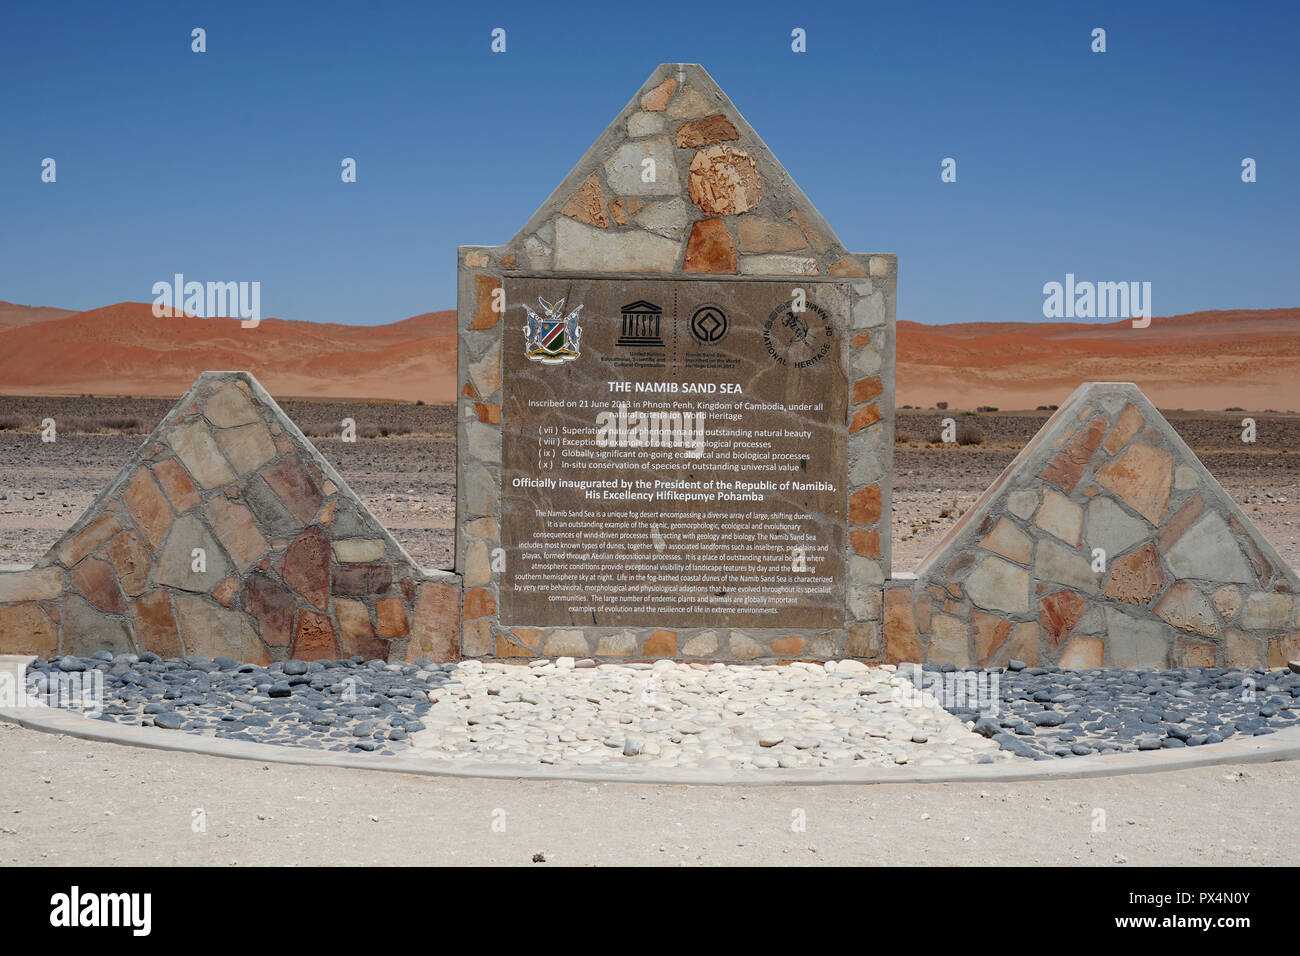 Denkmal für das l'UNESCO Welterbe-Namib-Sandmeer, Sossusvlei, Namib, Namib-Naukluft National Park, Namibie, Afrique Banque D'Images